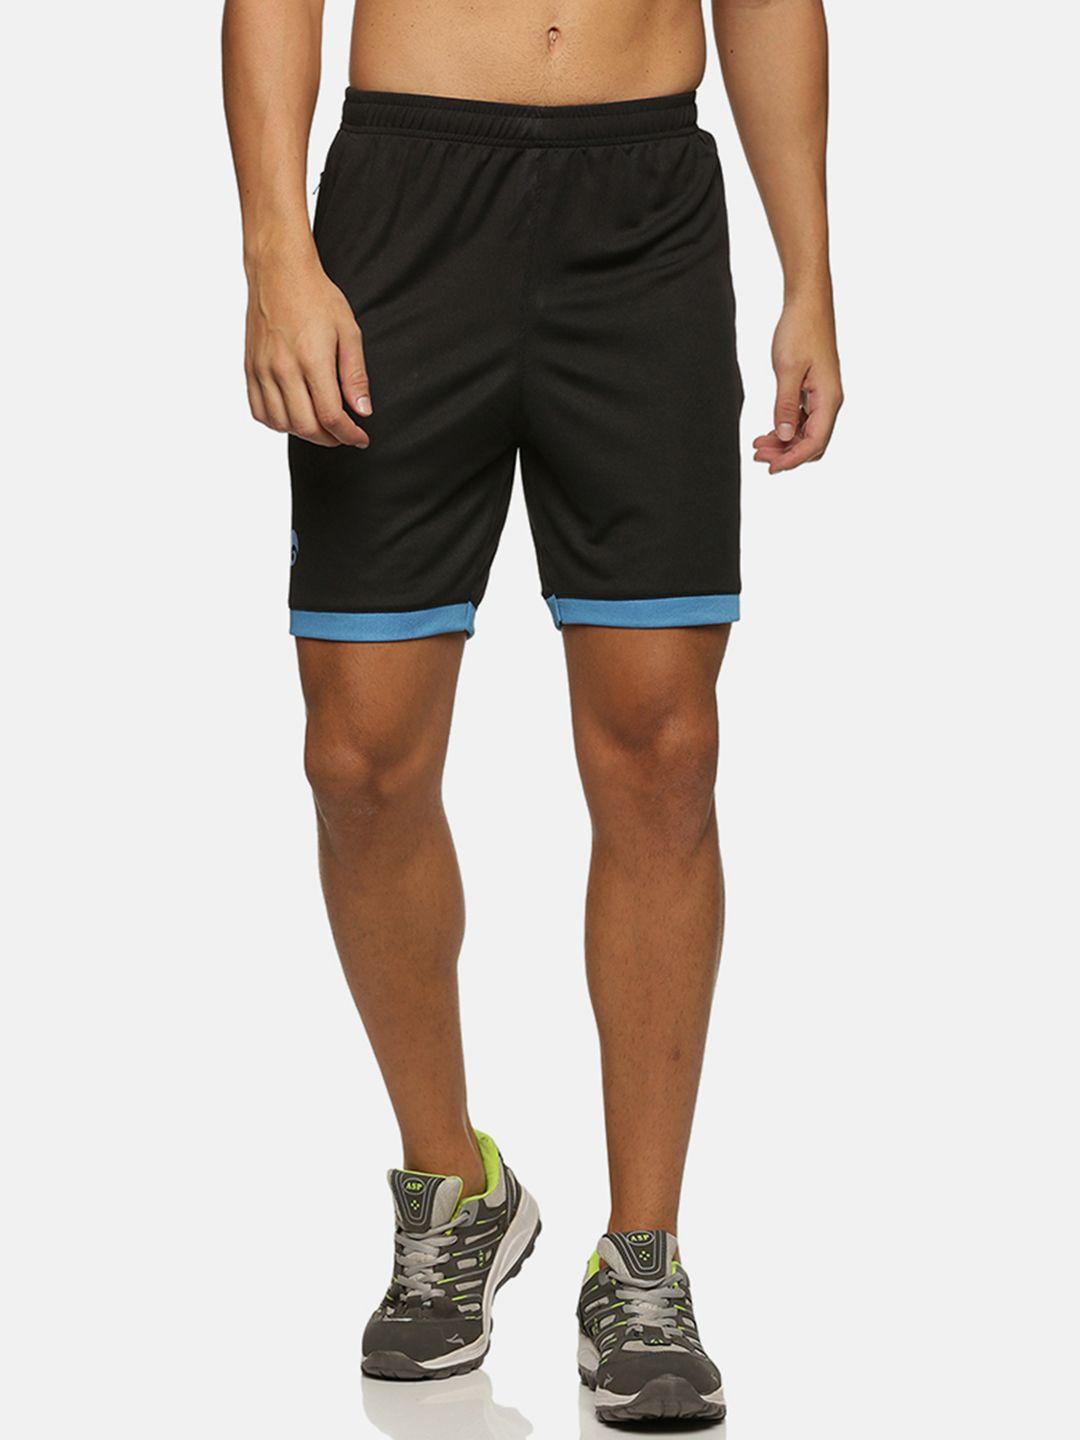 omtex men cotton training sports shorts